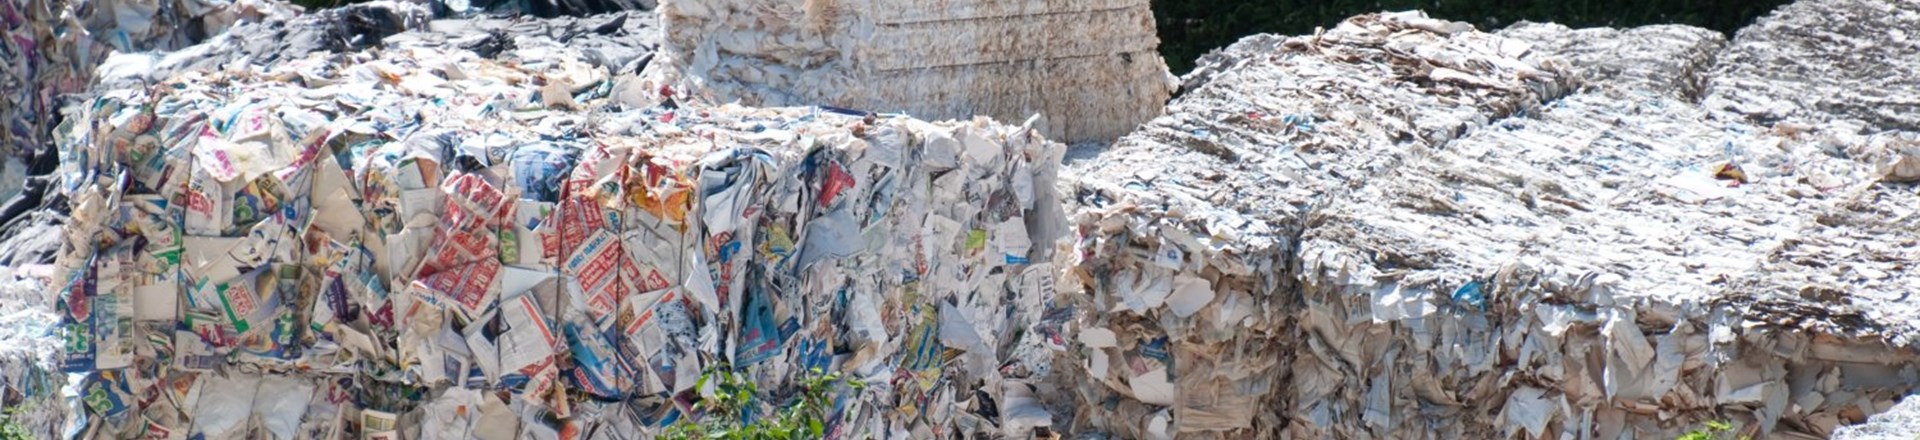 Paper Recycling In Ponte A Serraglio